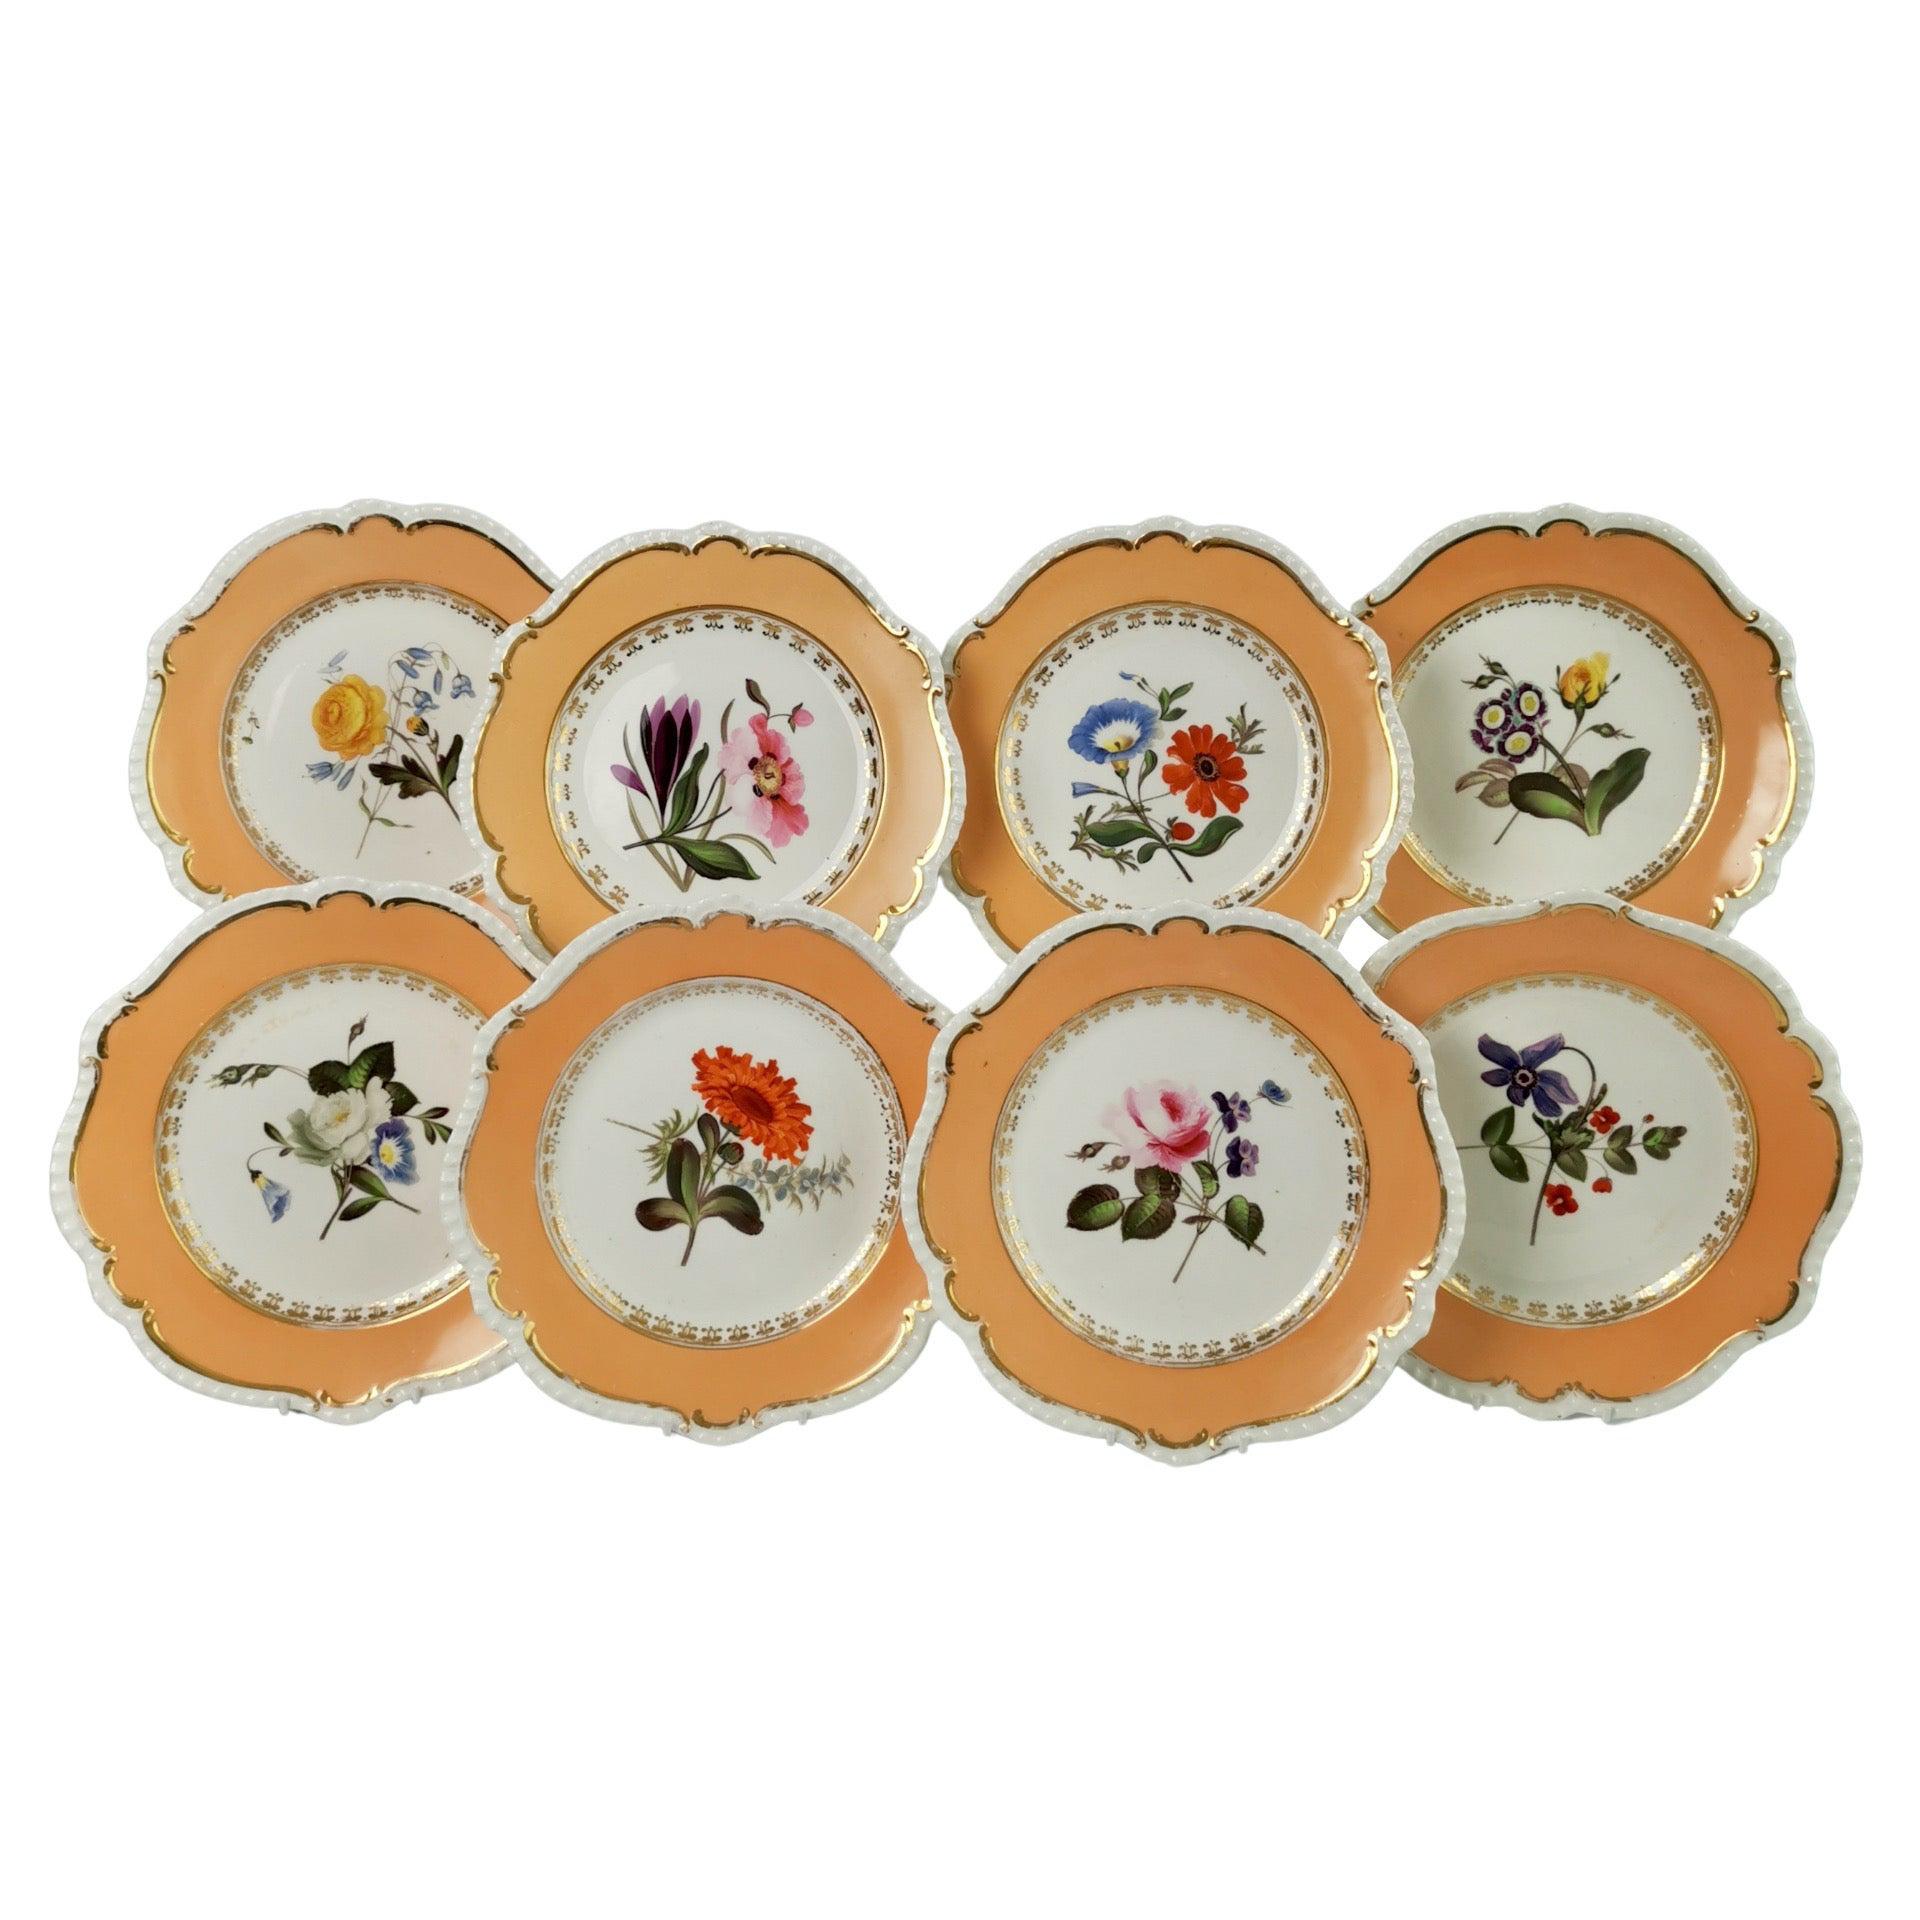 Coalport Set of 8 Porcelain Plates, Peach with Flowers, Regency 1820-1825